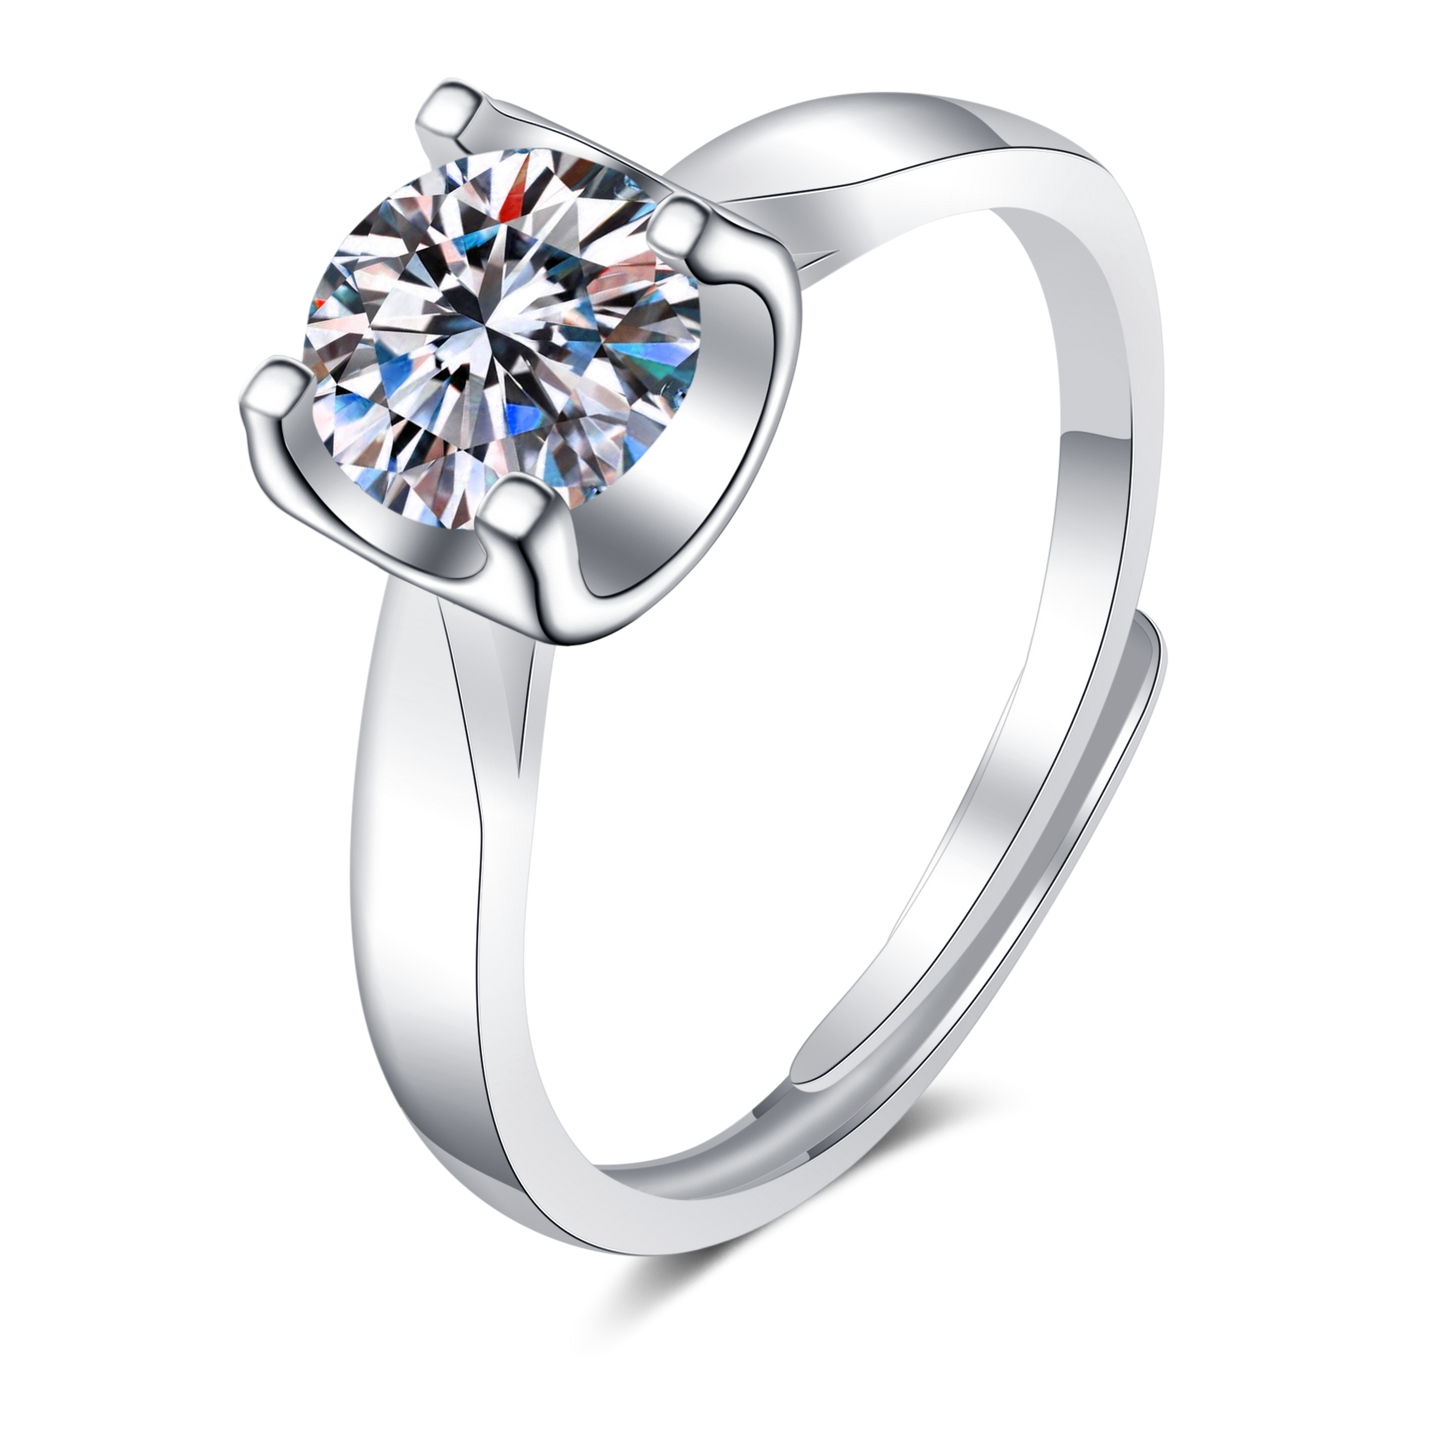 2 CT MOISSANITE Diamond Engagement solitaire Ring, Square, Solid 925 Silver, Elegant Wedding Ring, PT950, Passes Diamond Tester az147 Xaxe.com